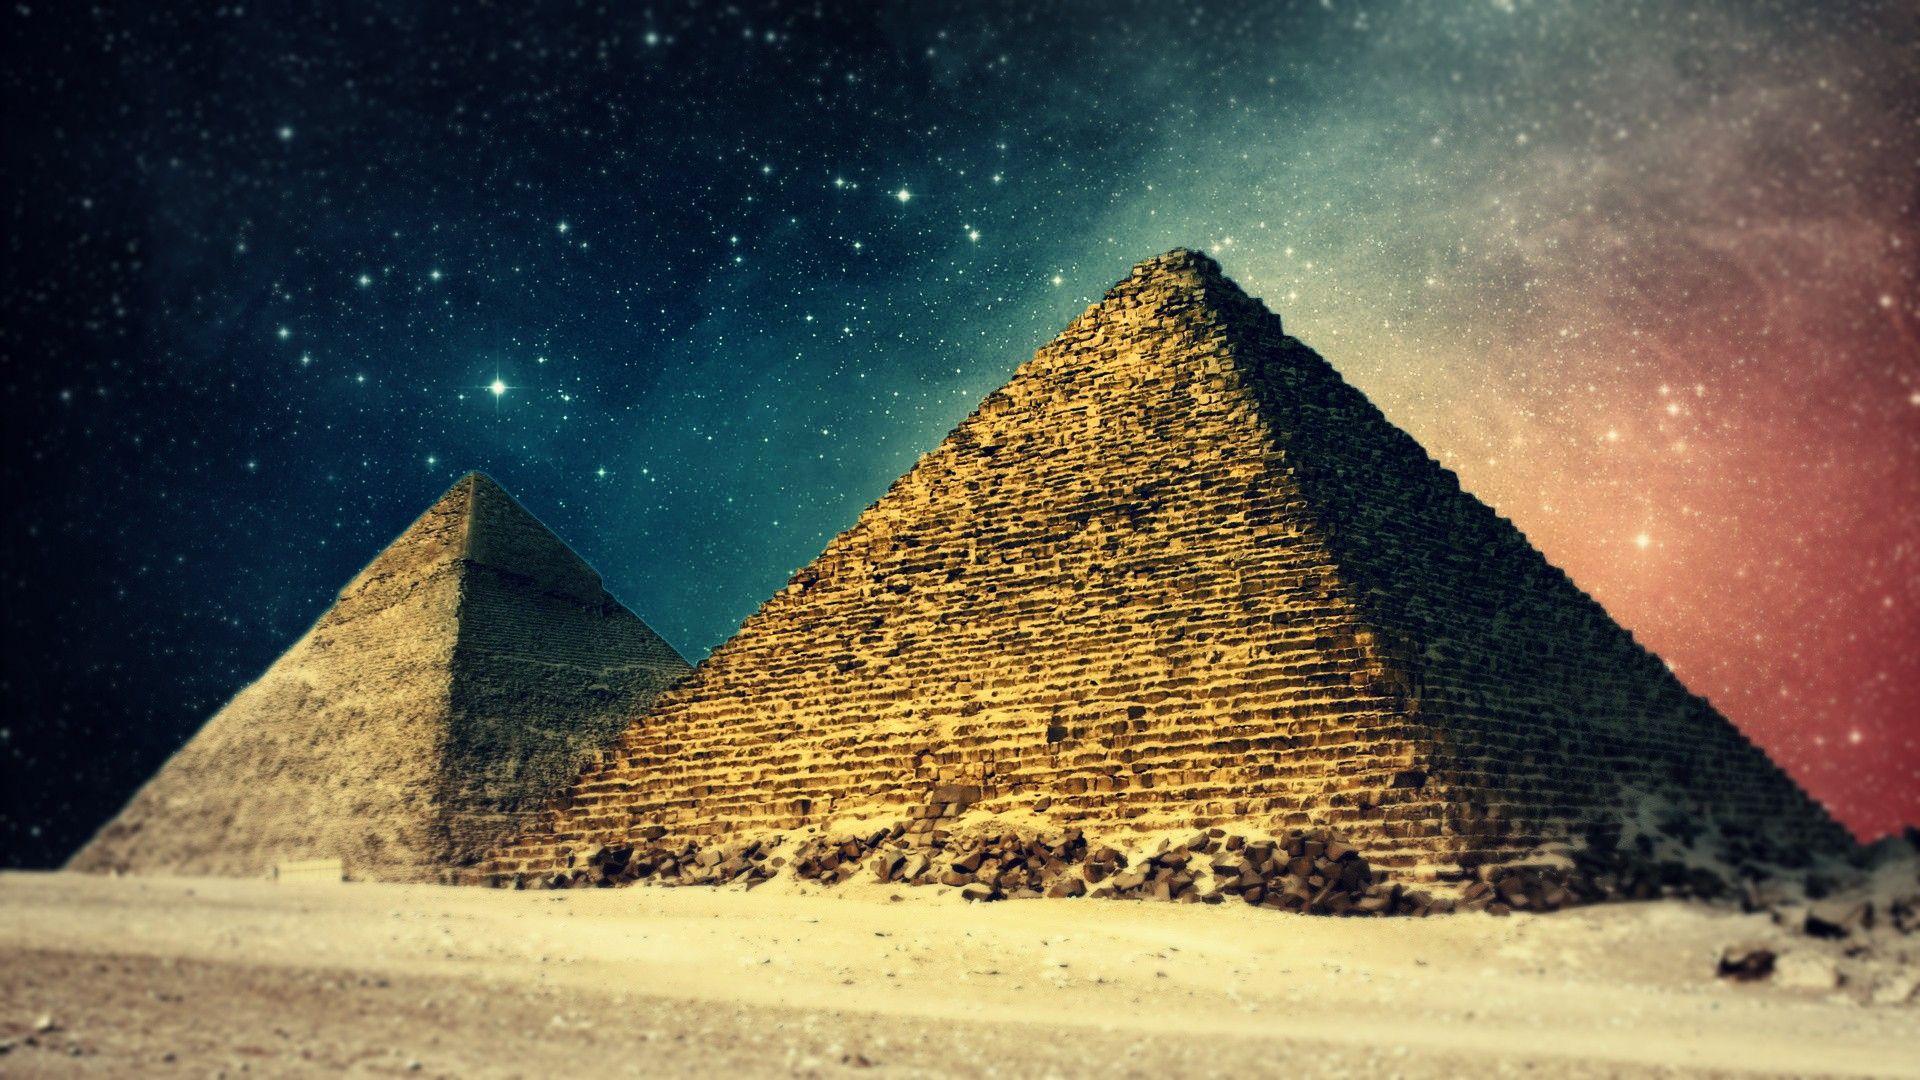 Xmas. Great pyramid of giza